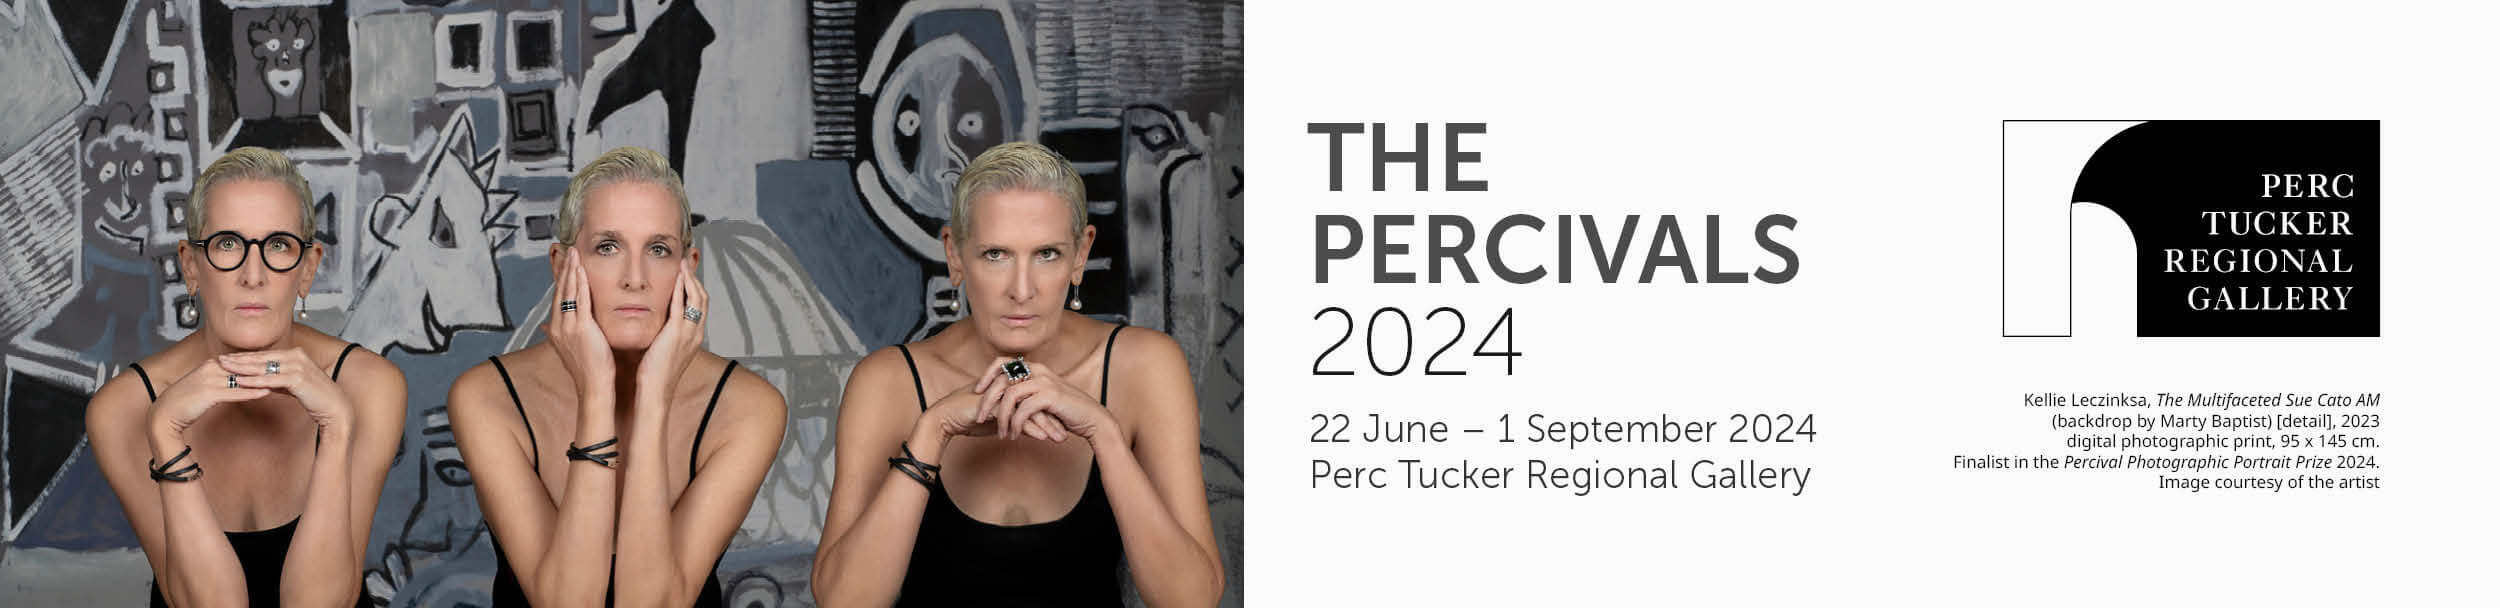 The Percivals 2024 - 22 June to 1 September 2024 at Perc Tucker Regional Gallery.